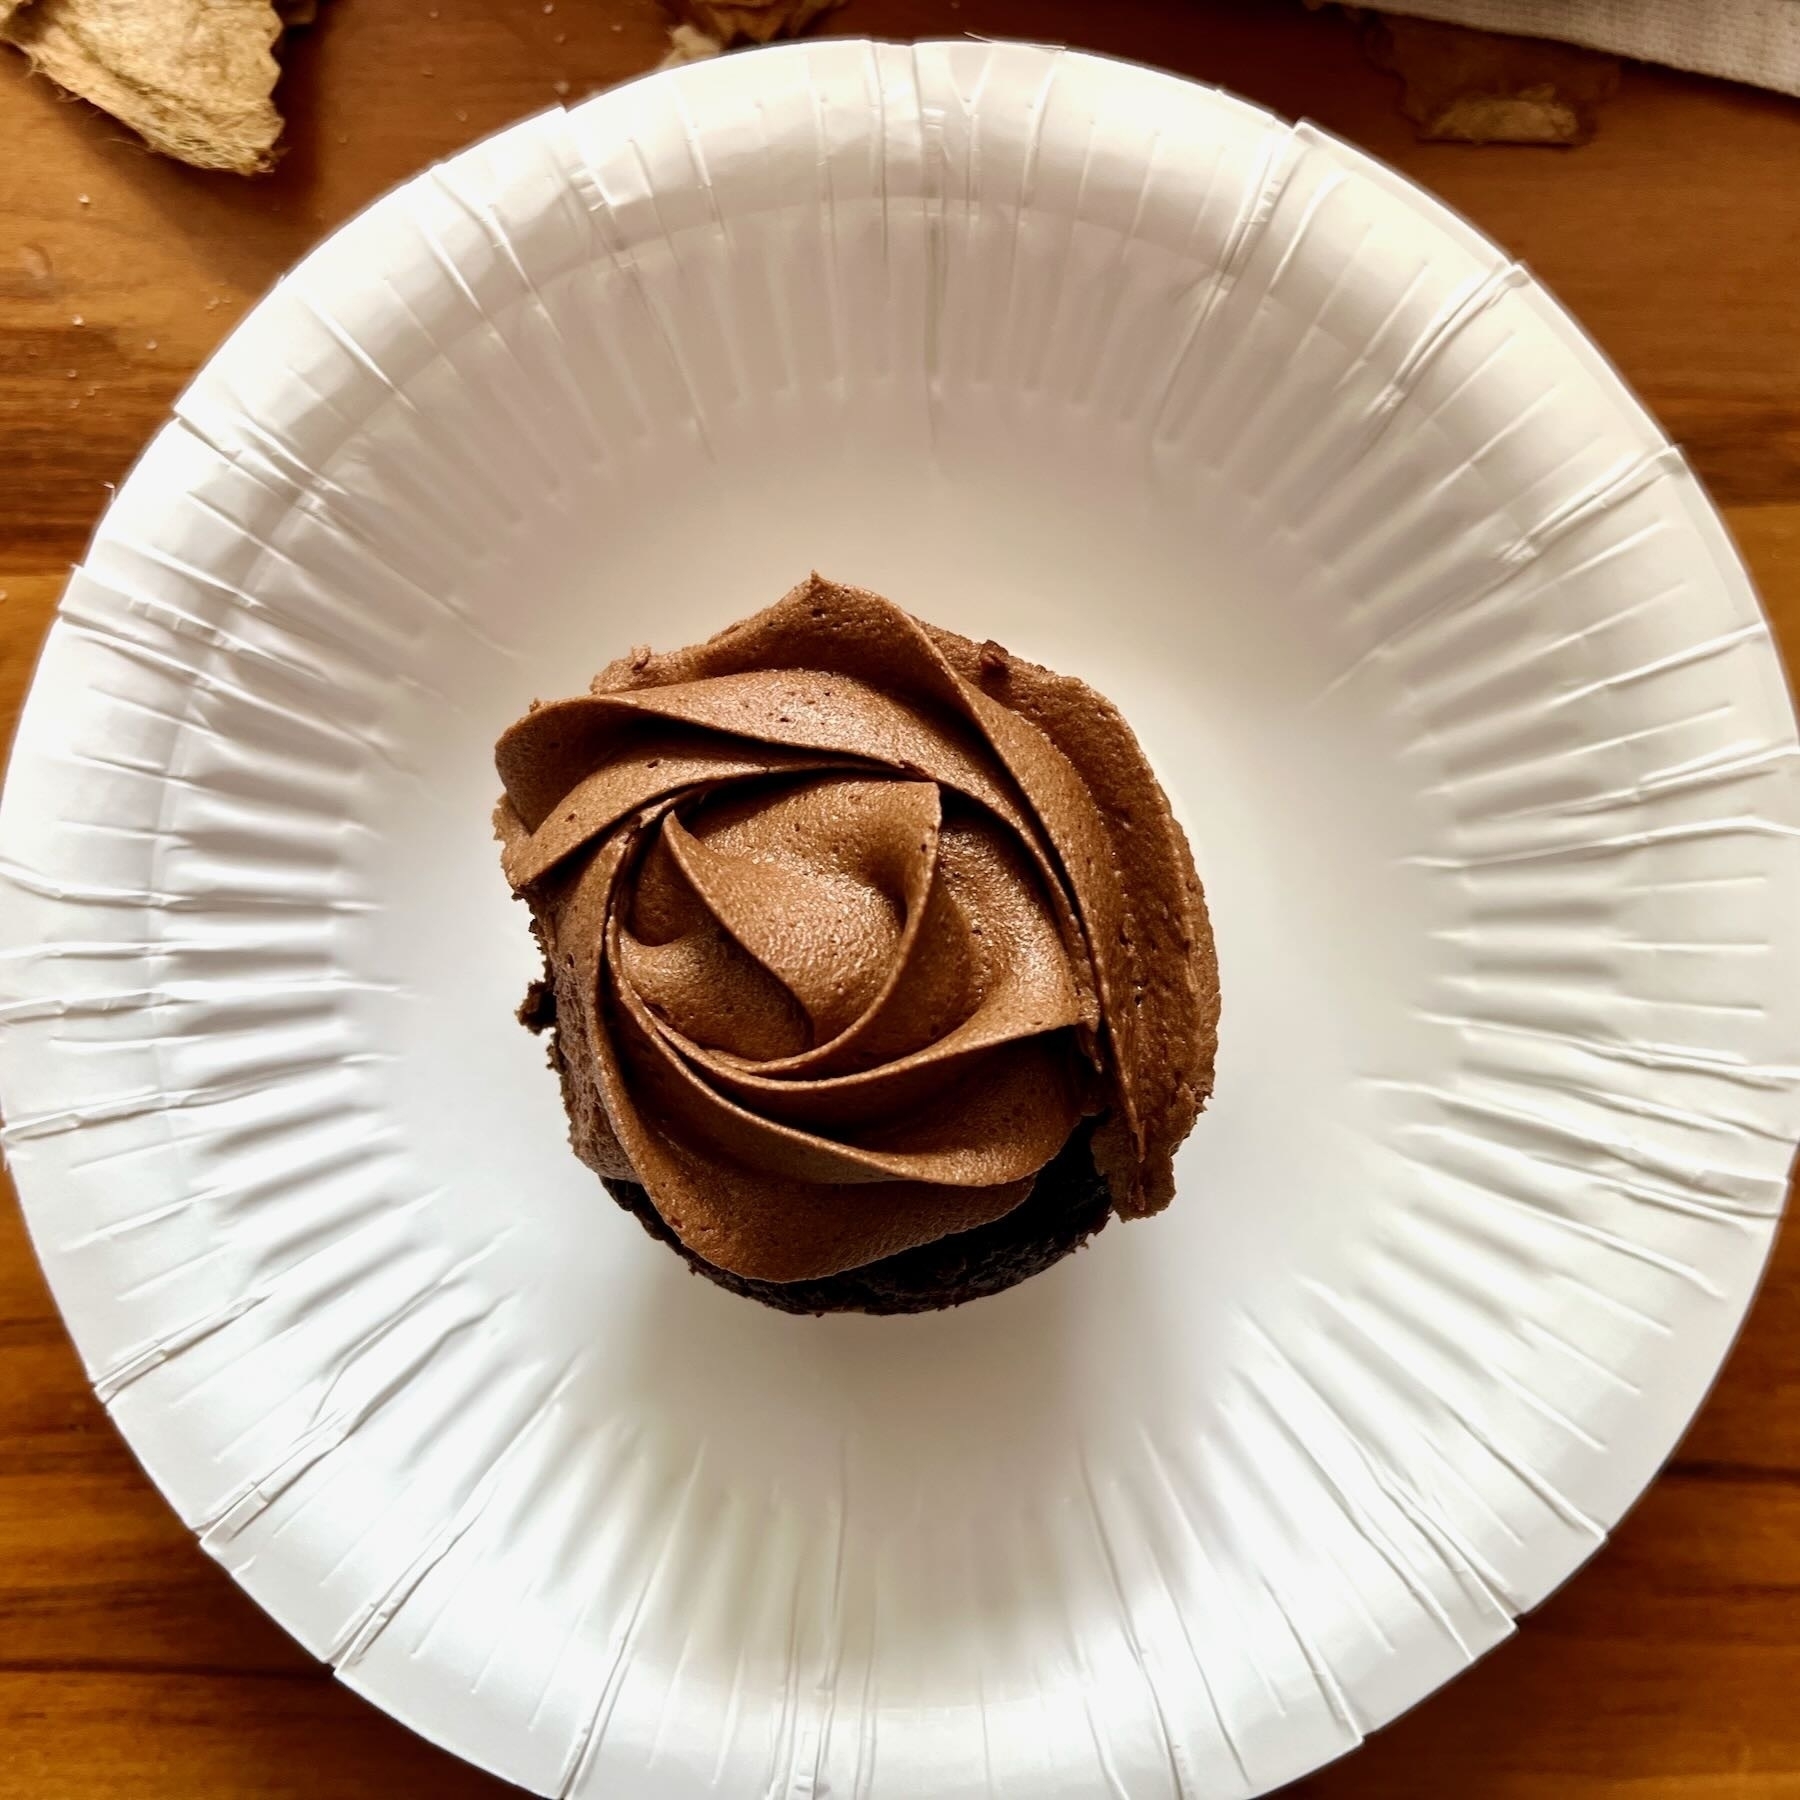 Chocolate cupcake iced like a rose. 